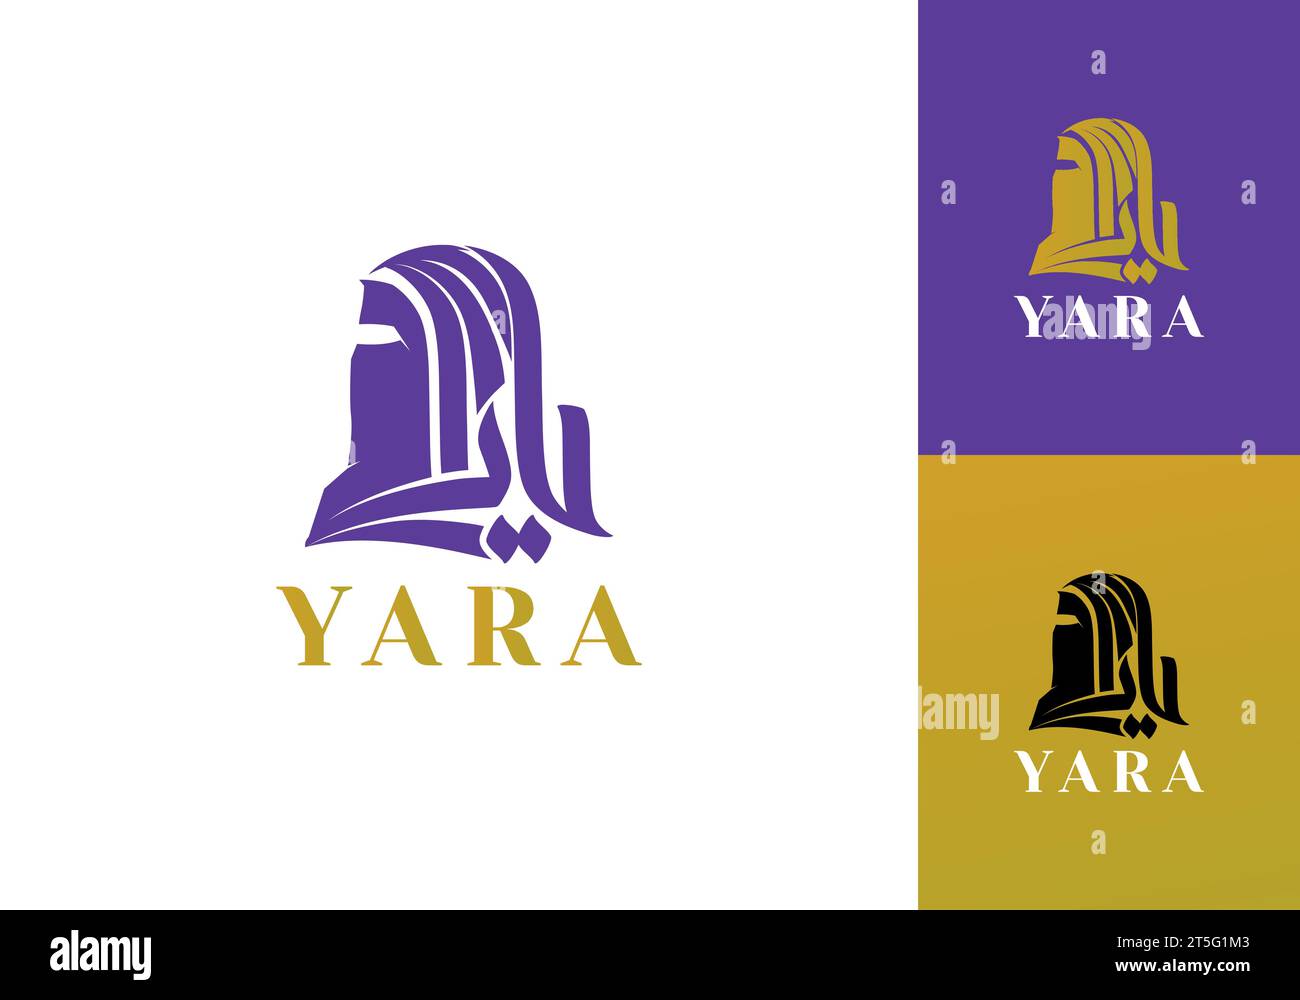 Yara (يارا) Arabic Logo design. It is minimalist, modern, elegant and simple Design. suitable for Hijab, Clothing brand, Islamic lifestyle. Stock Vector